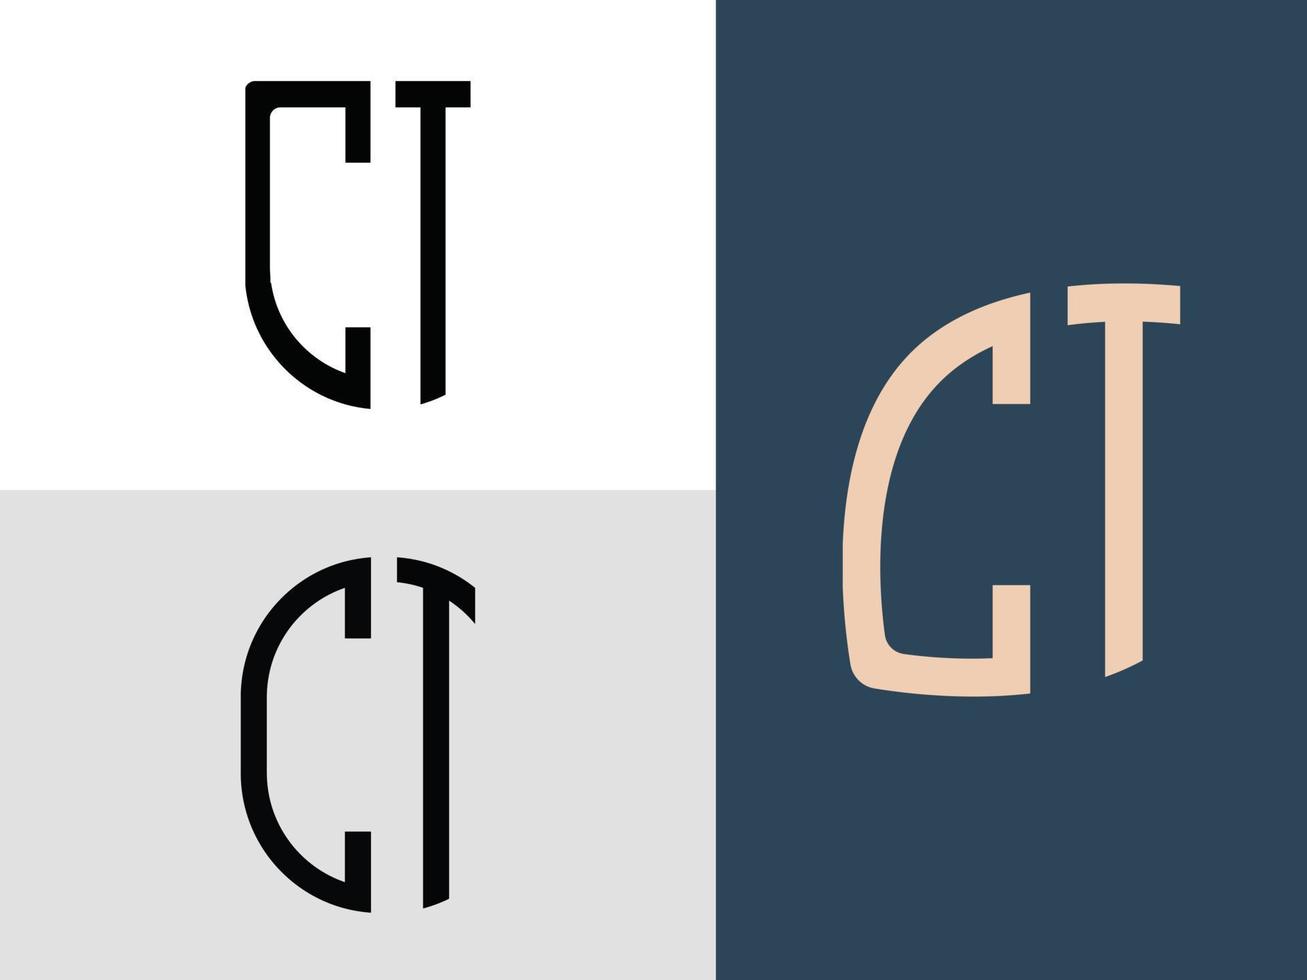 kreative anfangsbuchstaben ct-logo-designs paket. vektor